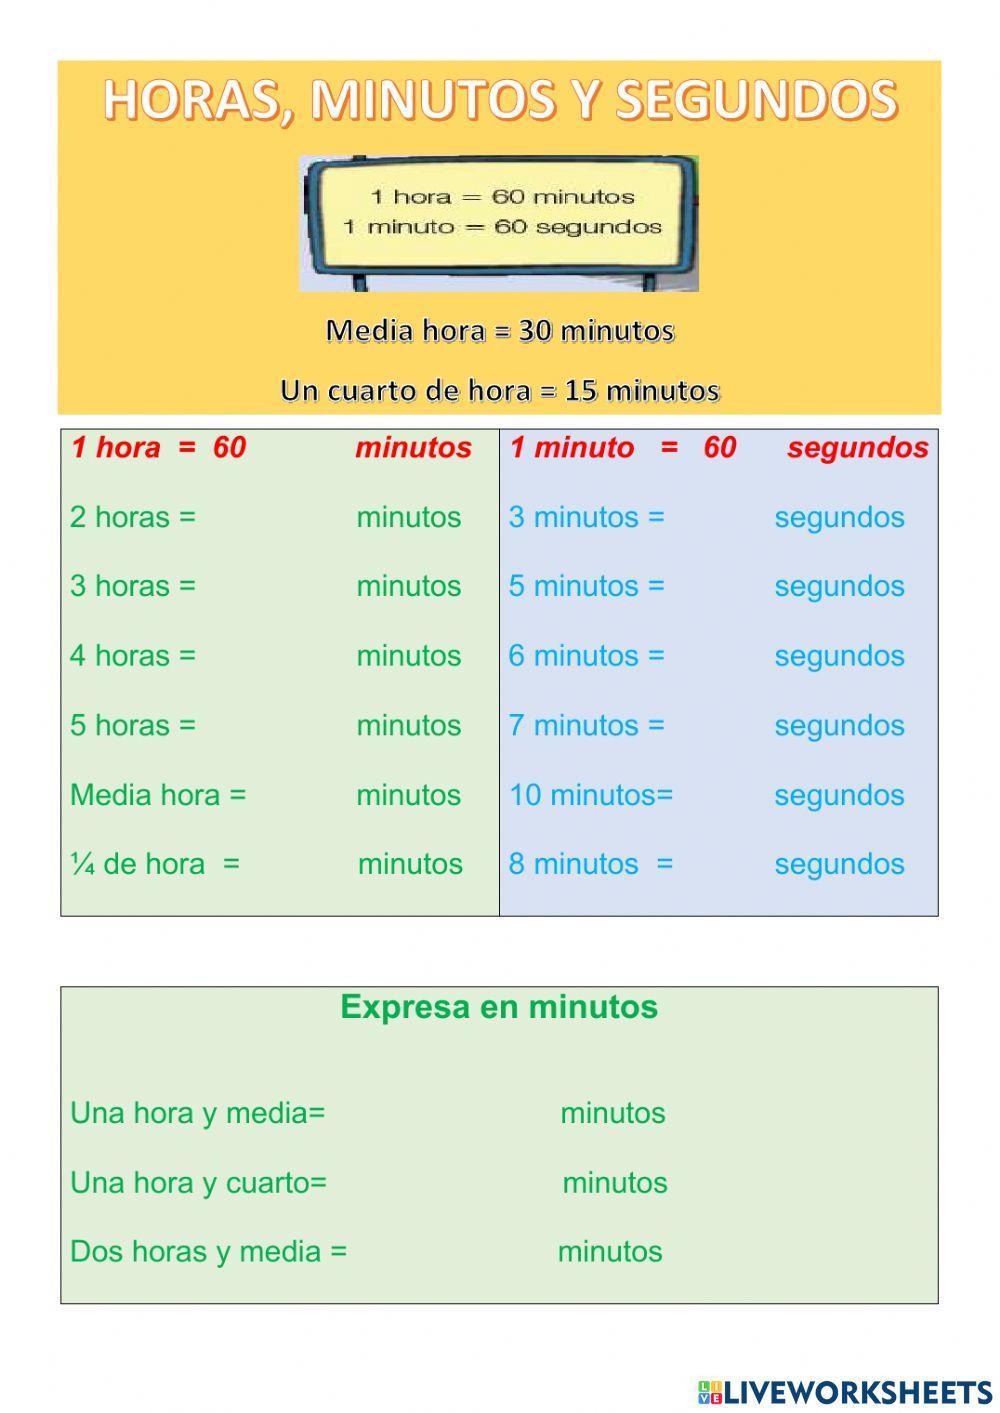 Horas, minutos y segundos online exercise for